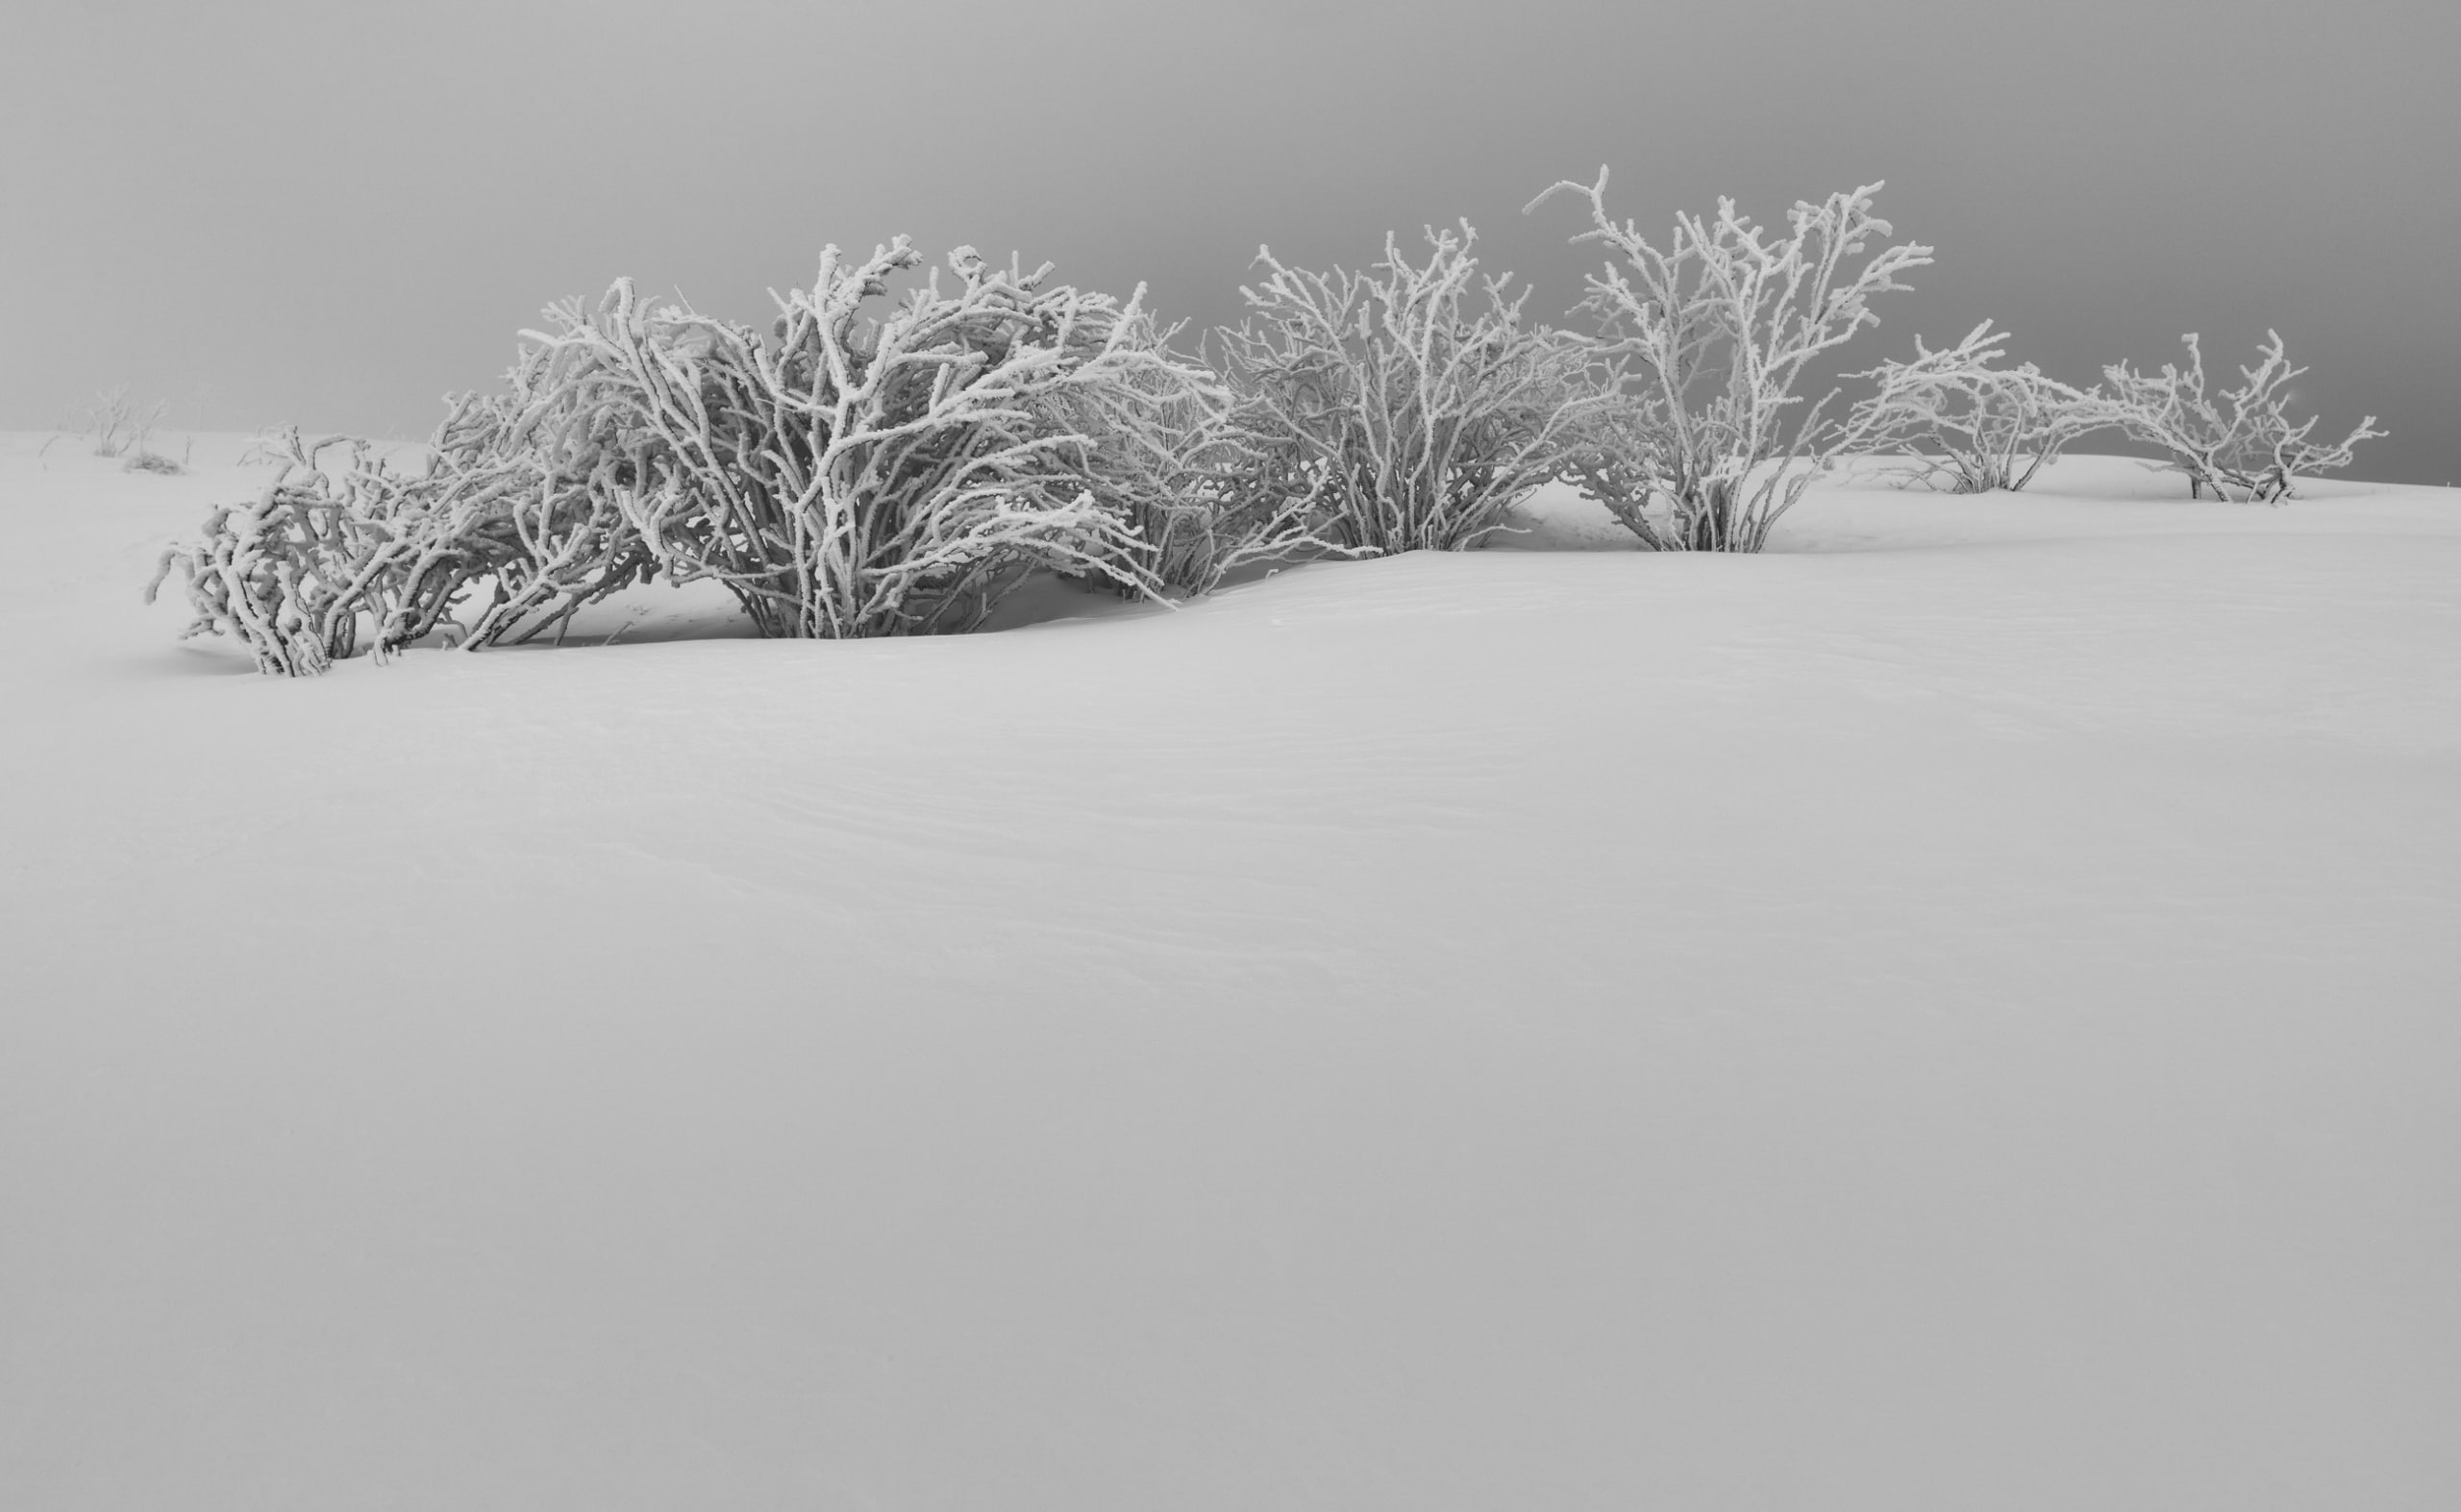 Winter White Snow Aesthetic Black and White, Seasons, Nature